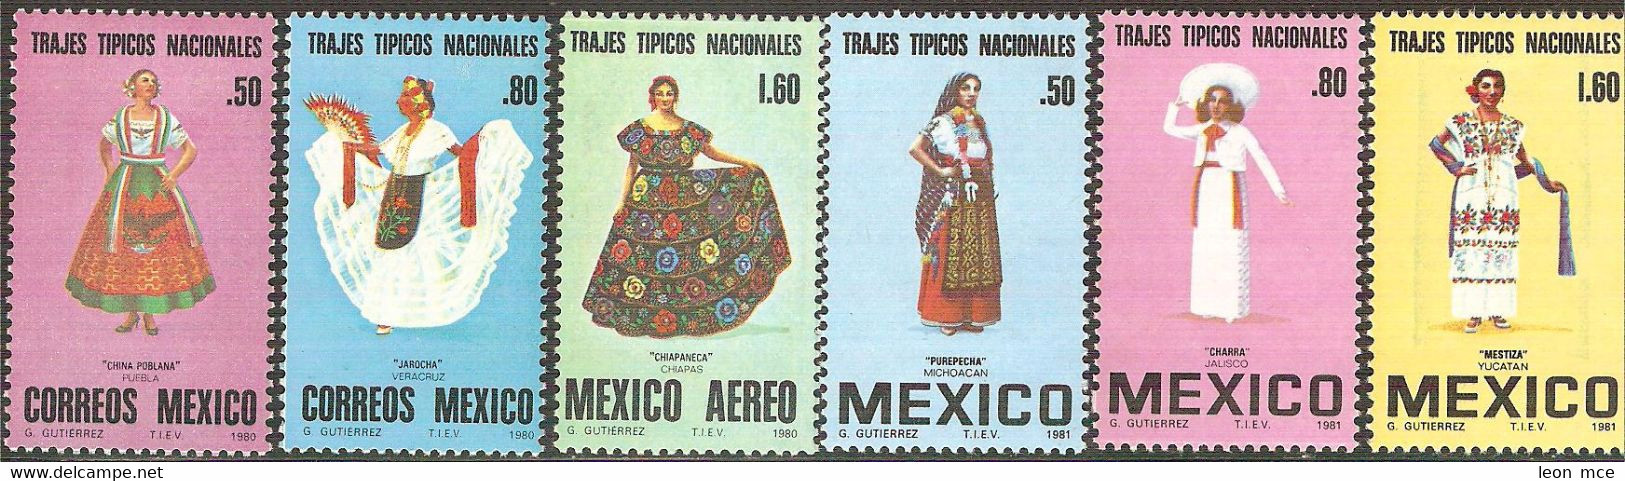 1980-1981 MÉXICO TRAJES TÍPICOS 2 SERIES MNH, TRADITIONAL COSTUMES - Mexico